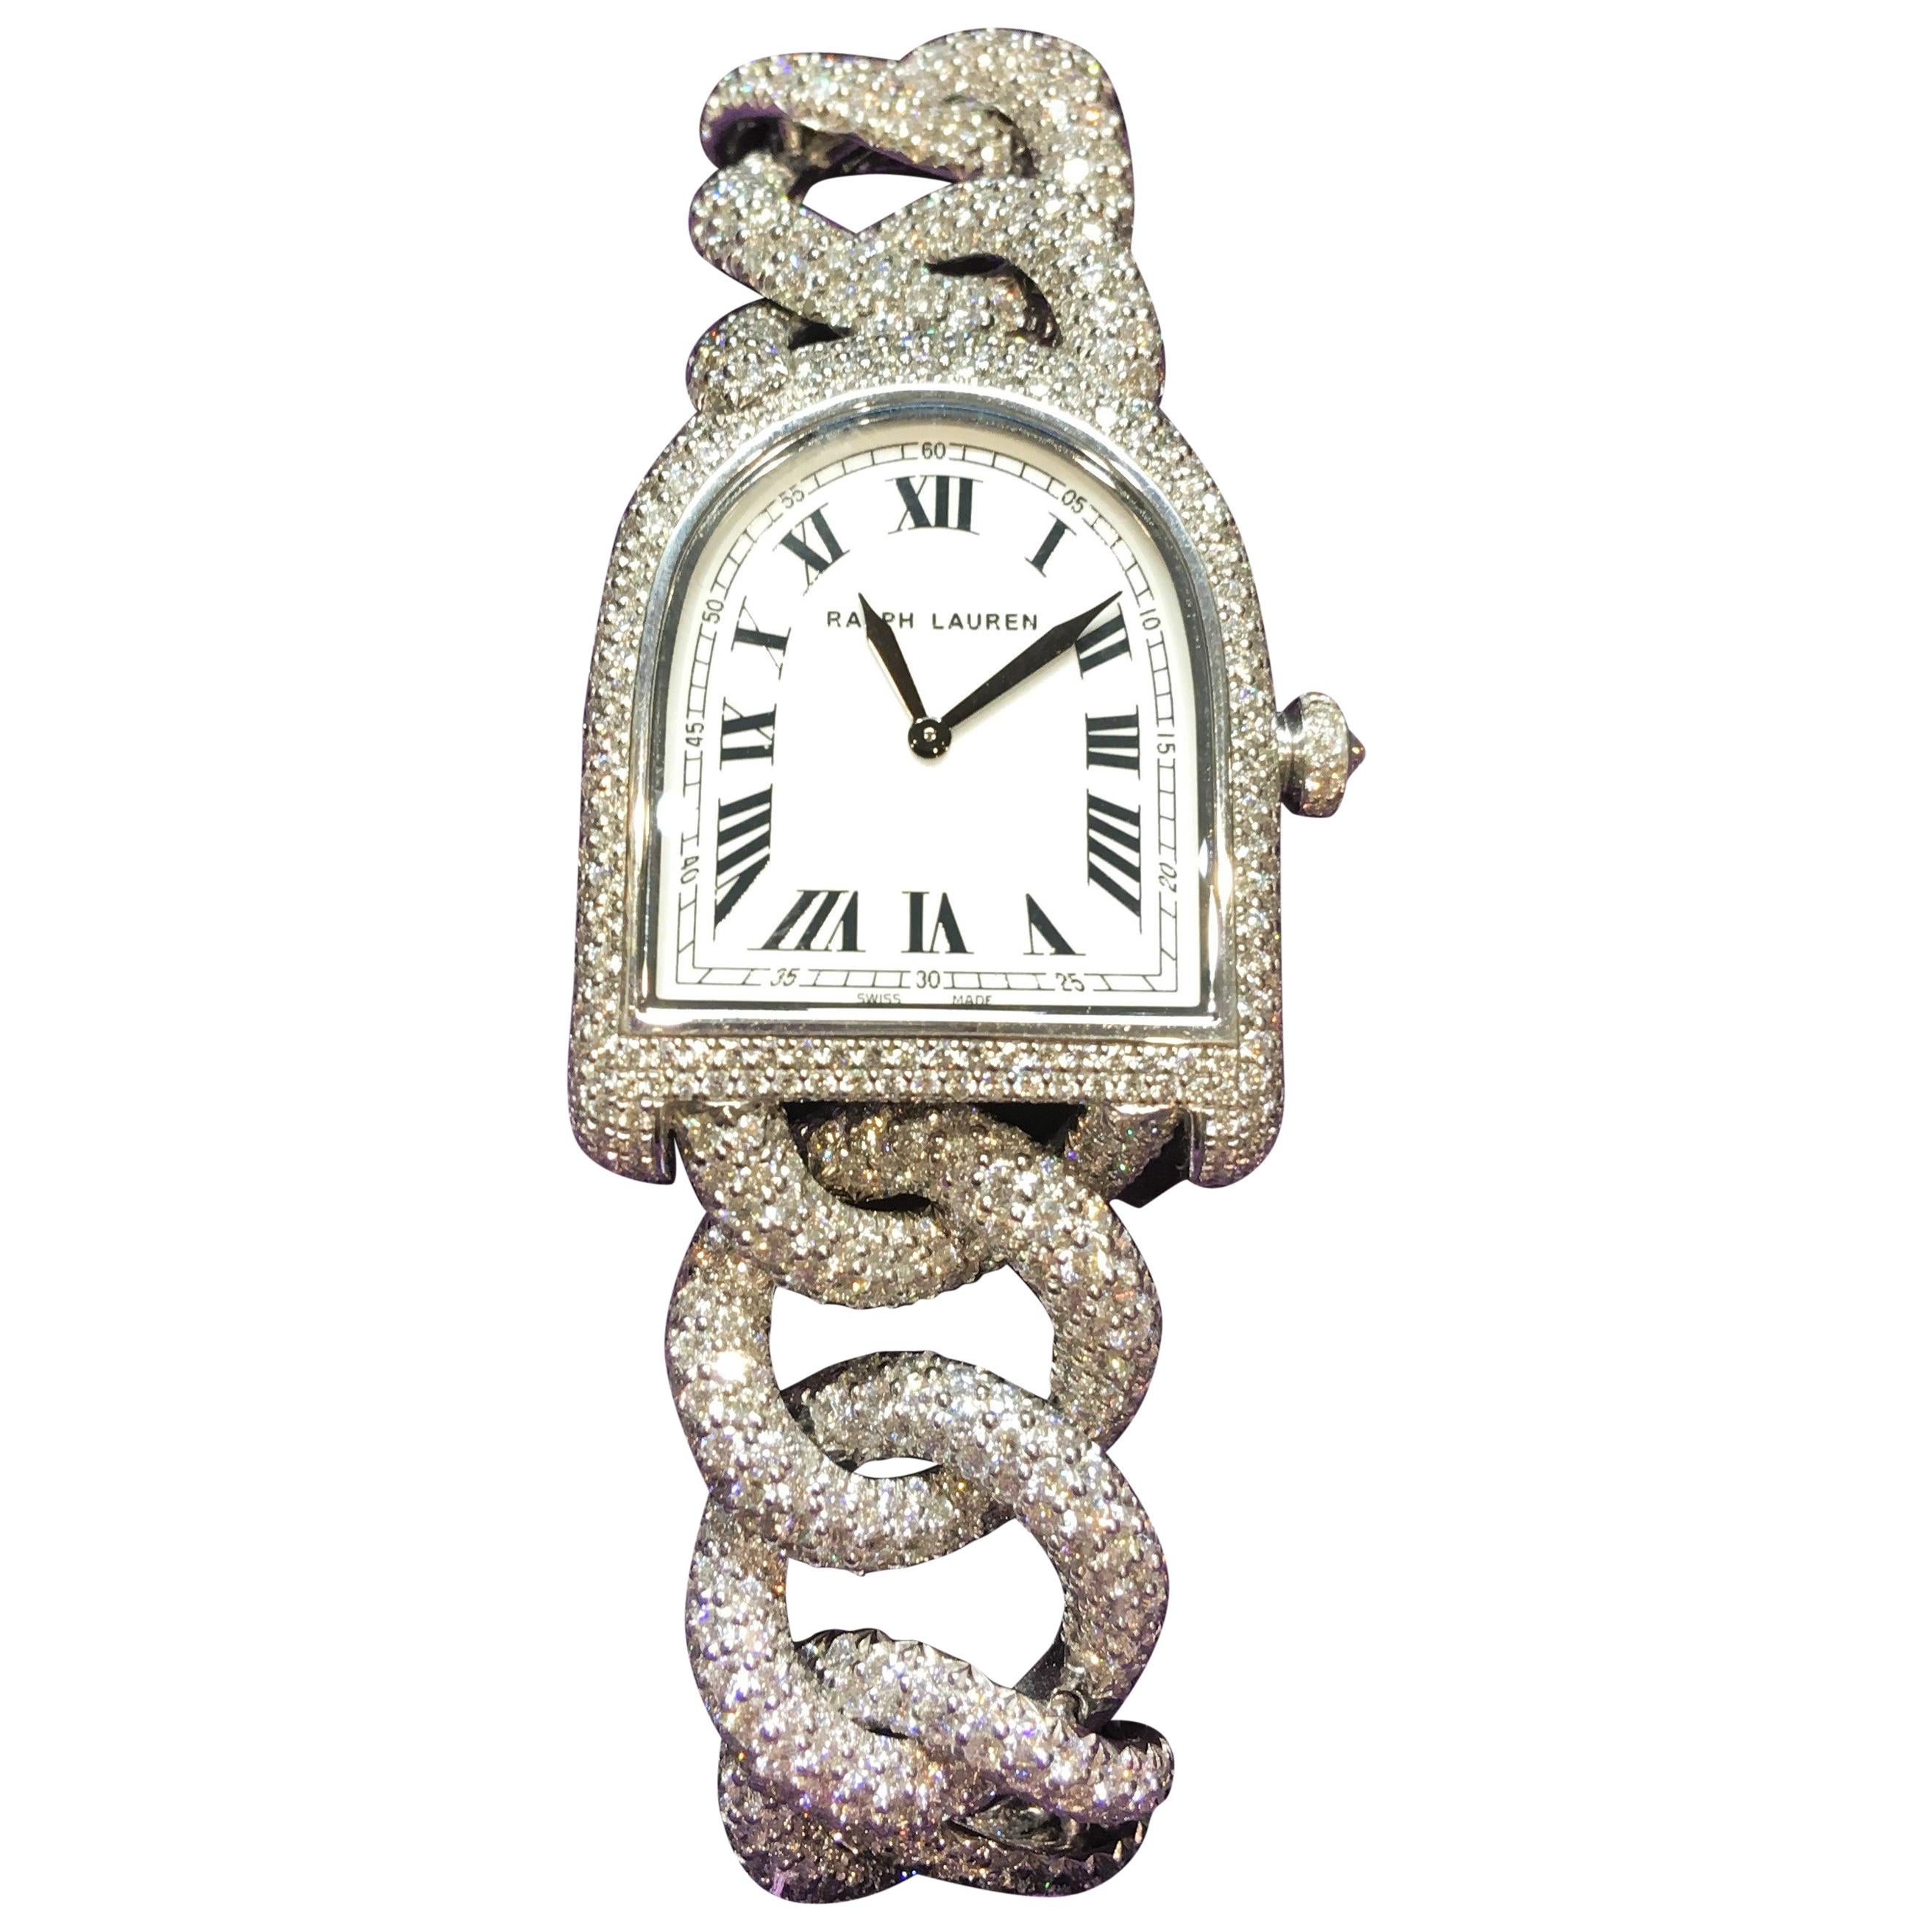 Ralph Lauren "Stirrup" Watch Diamonds Manual Winding, Limited Edition For Sale